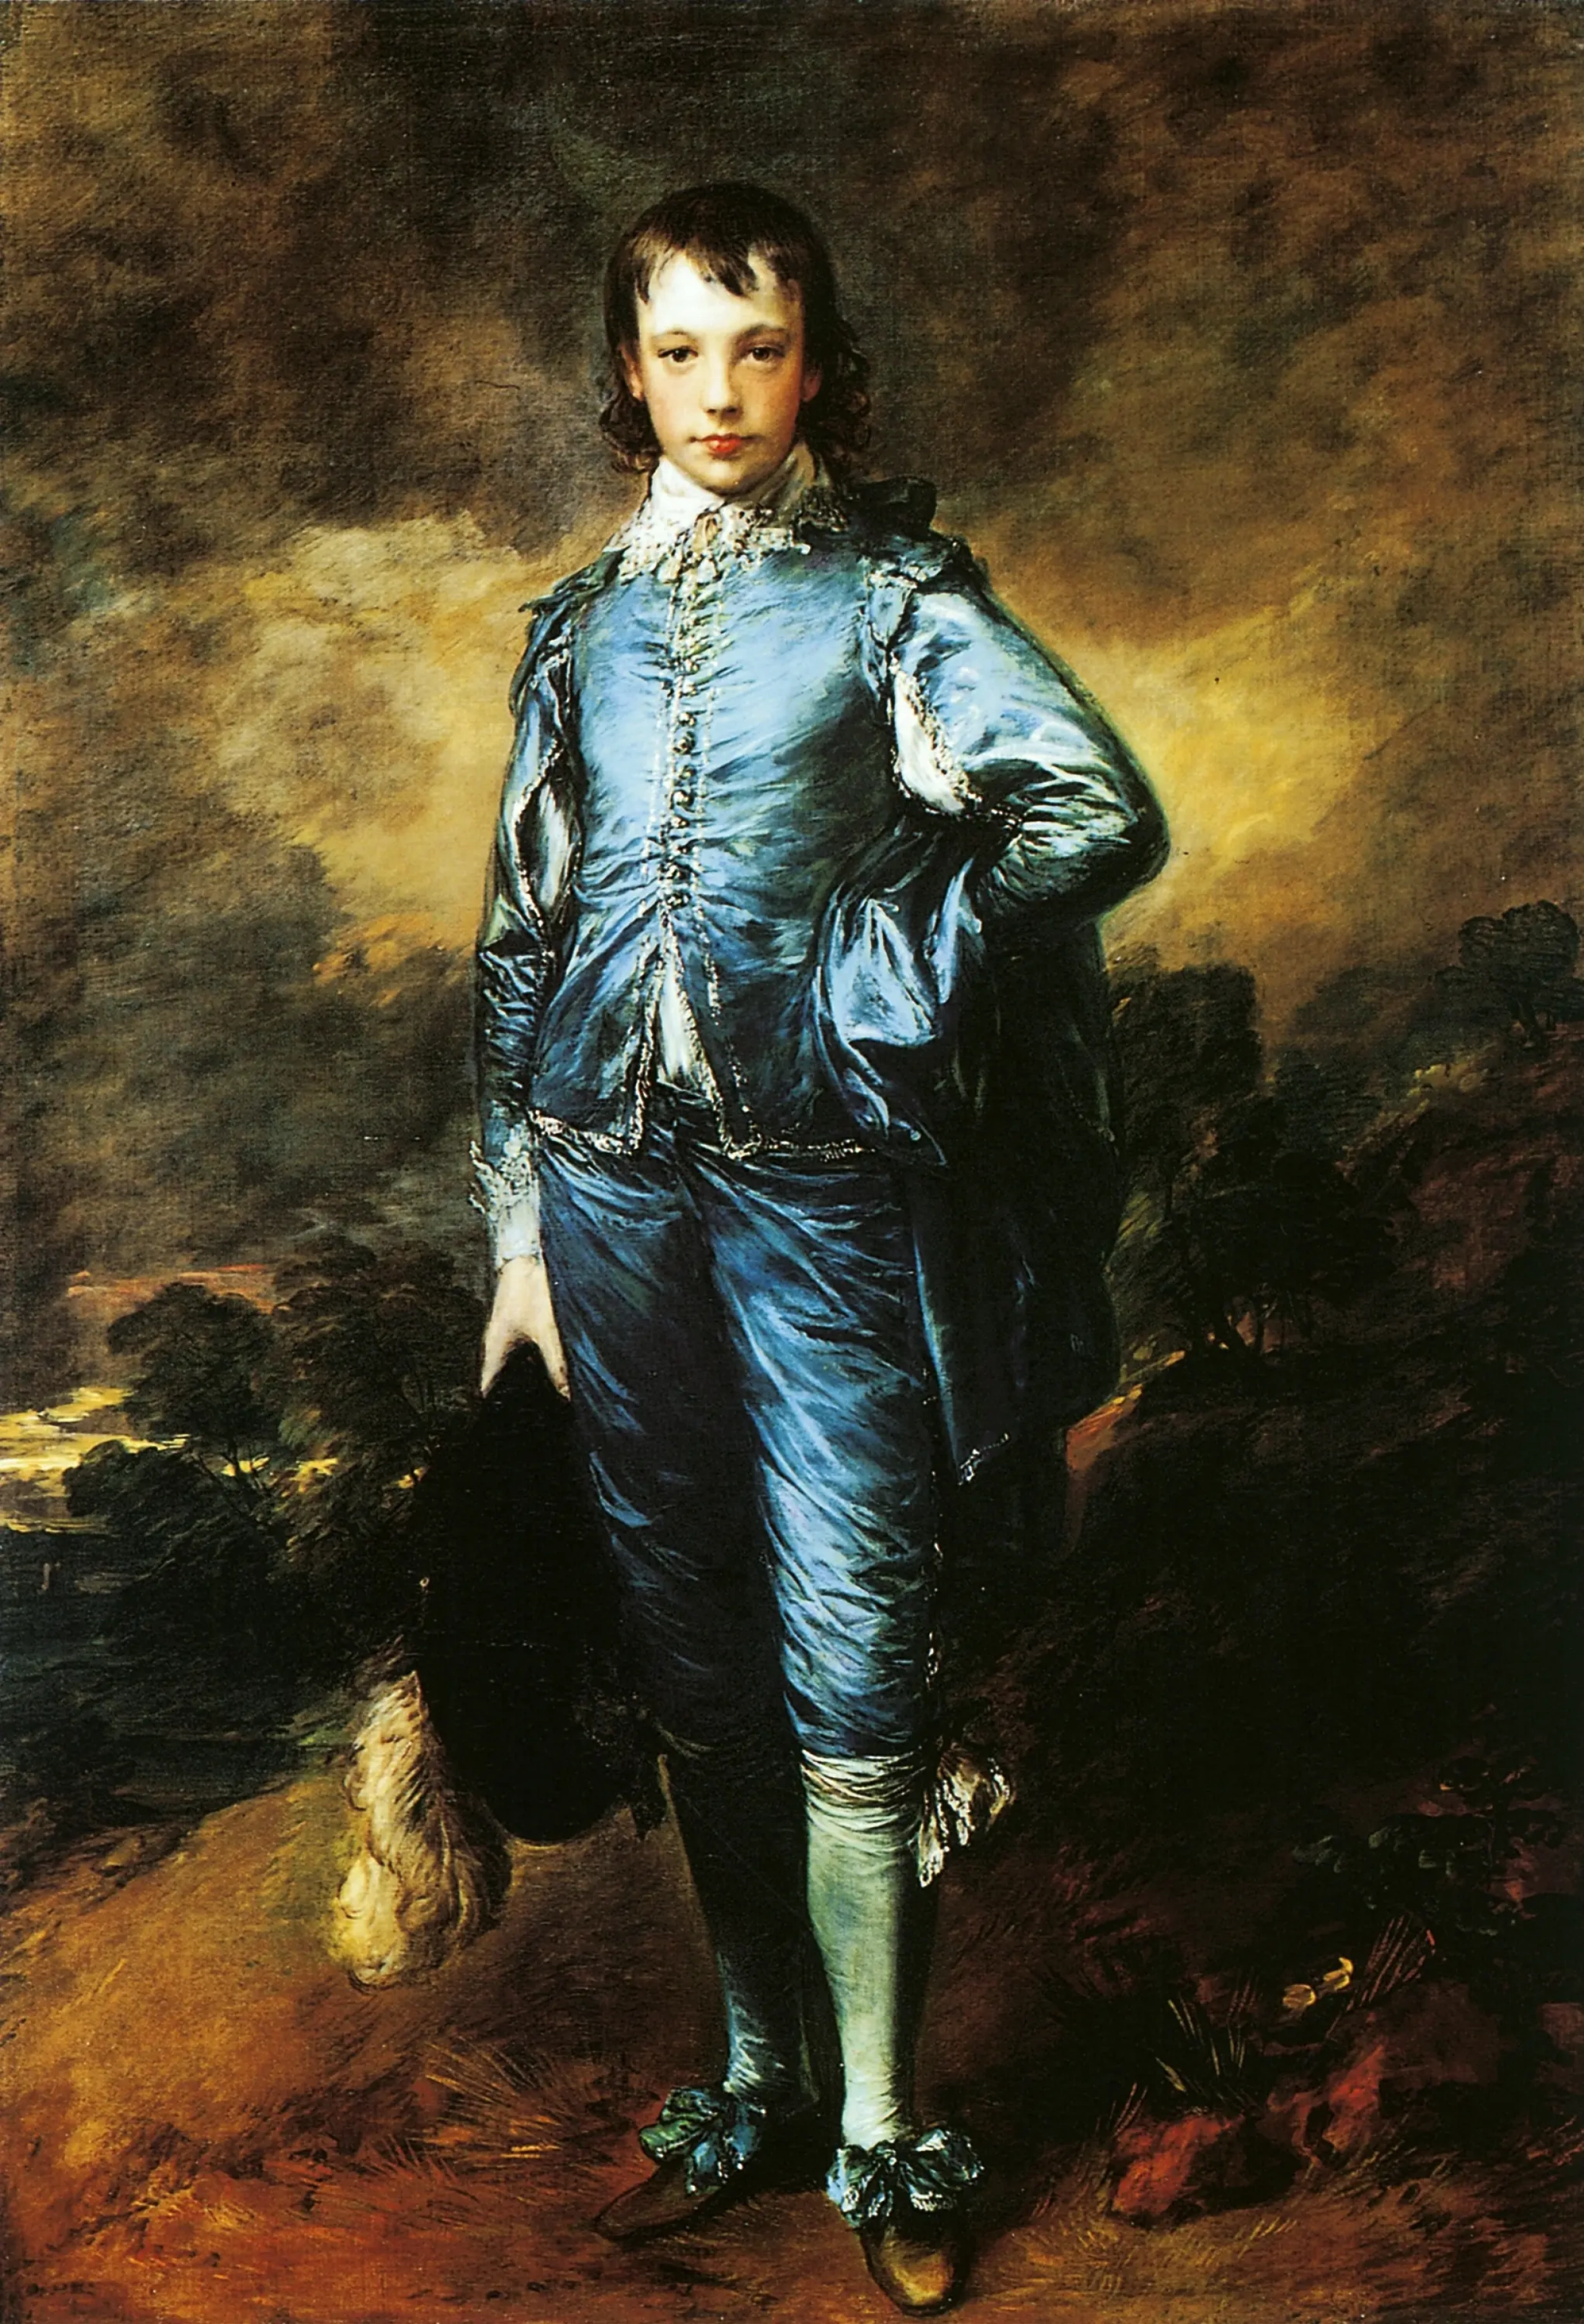 Thomas Gainsborough. The Blue Boy